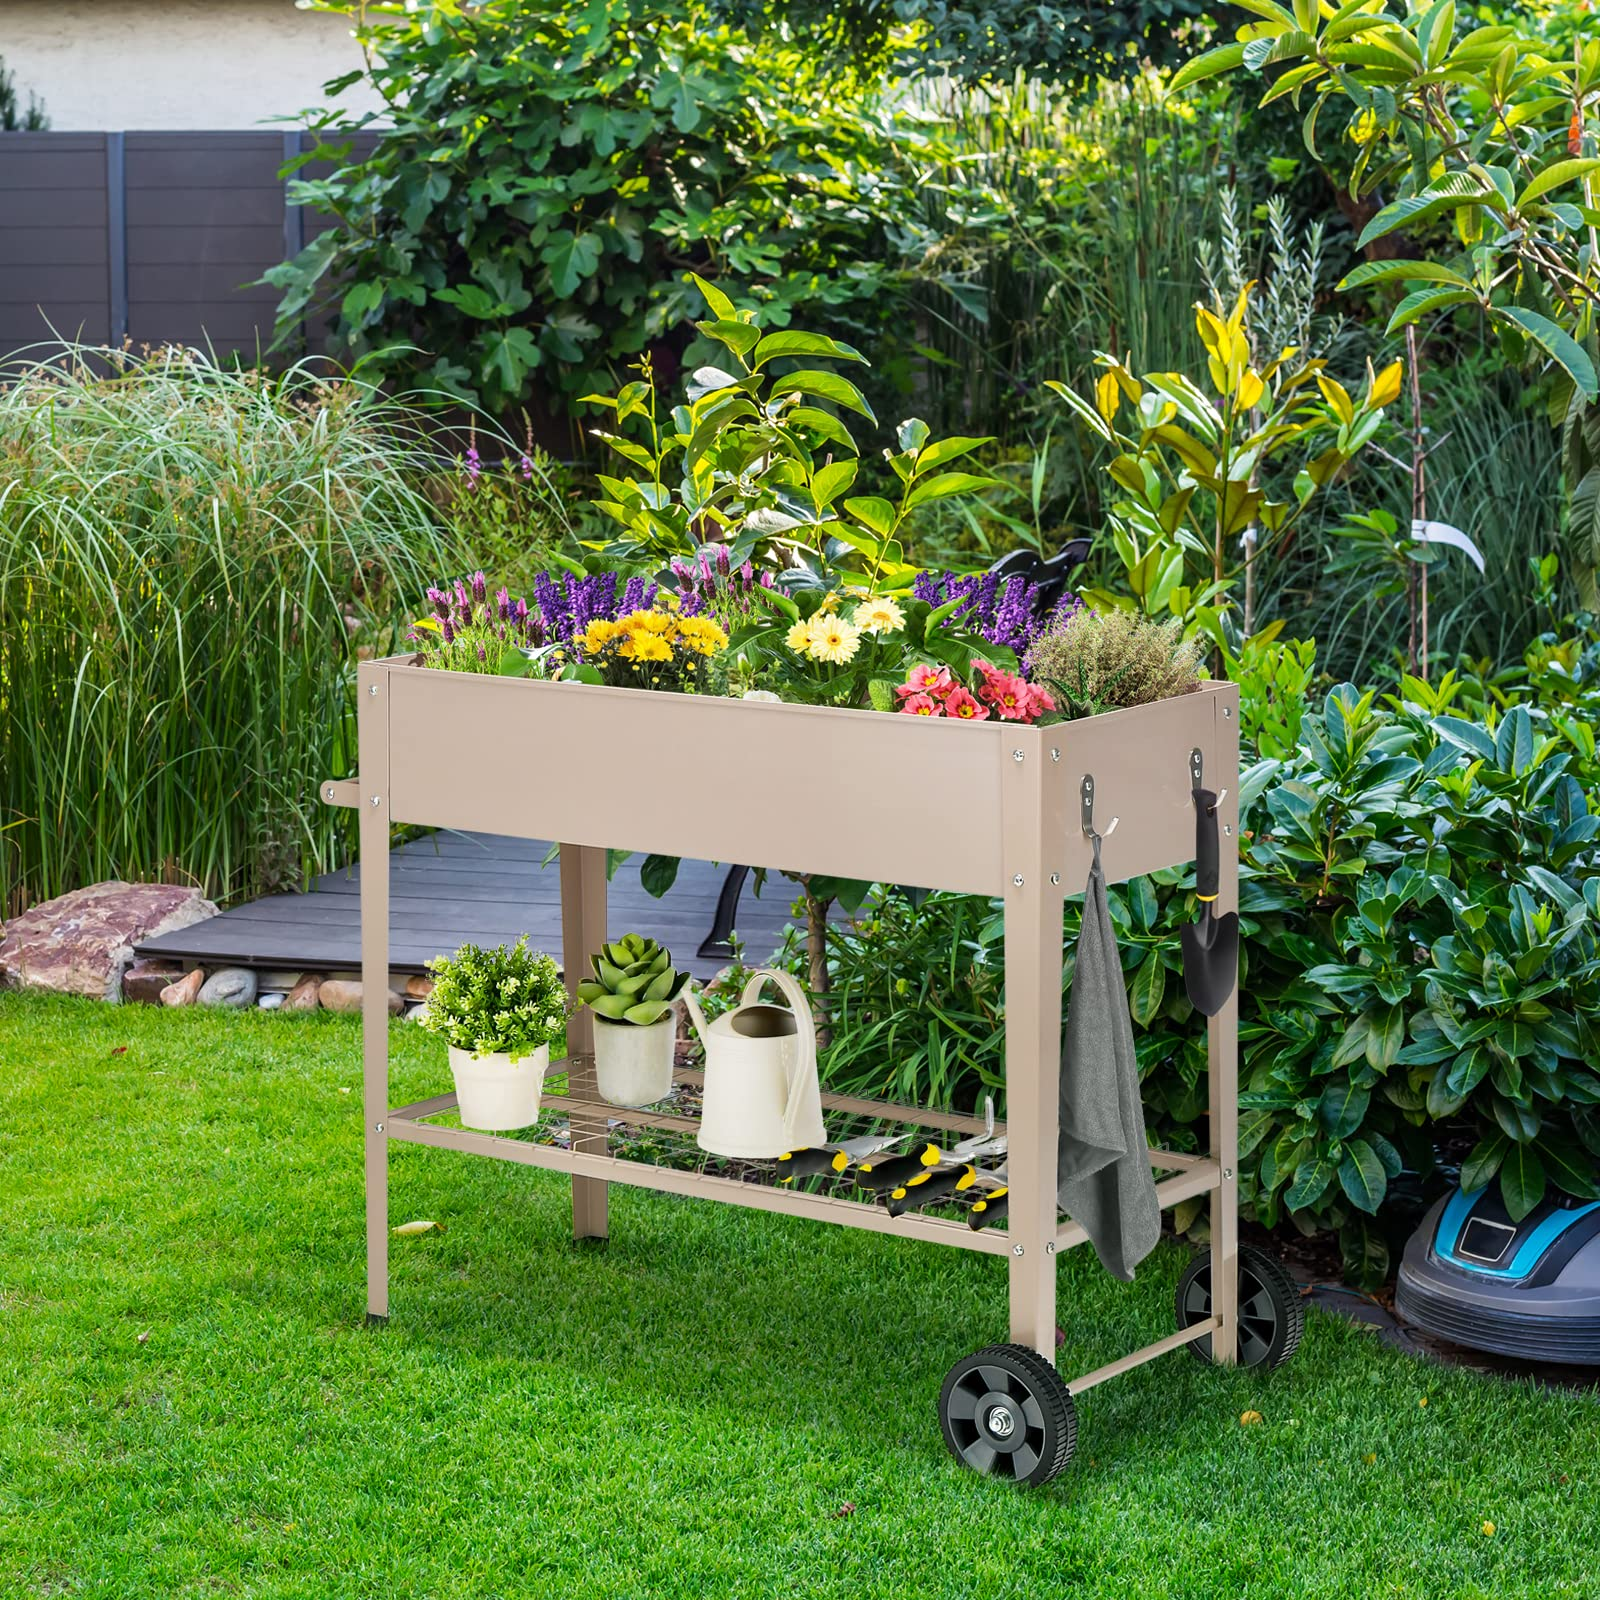 Giantex Raised Garden Bed with Legs, Metal Planter Box with Wheels, Storage Shelf (Light Brown)